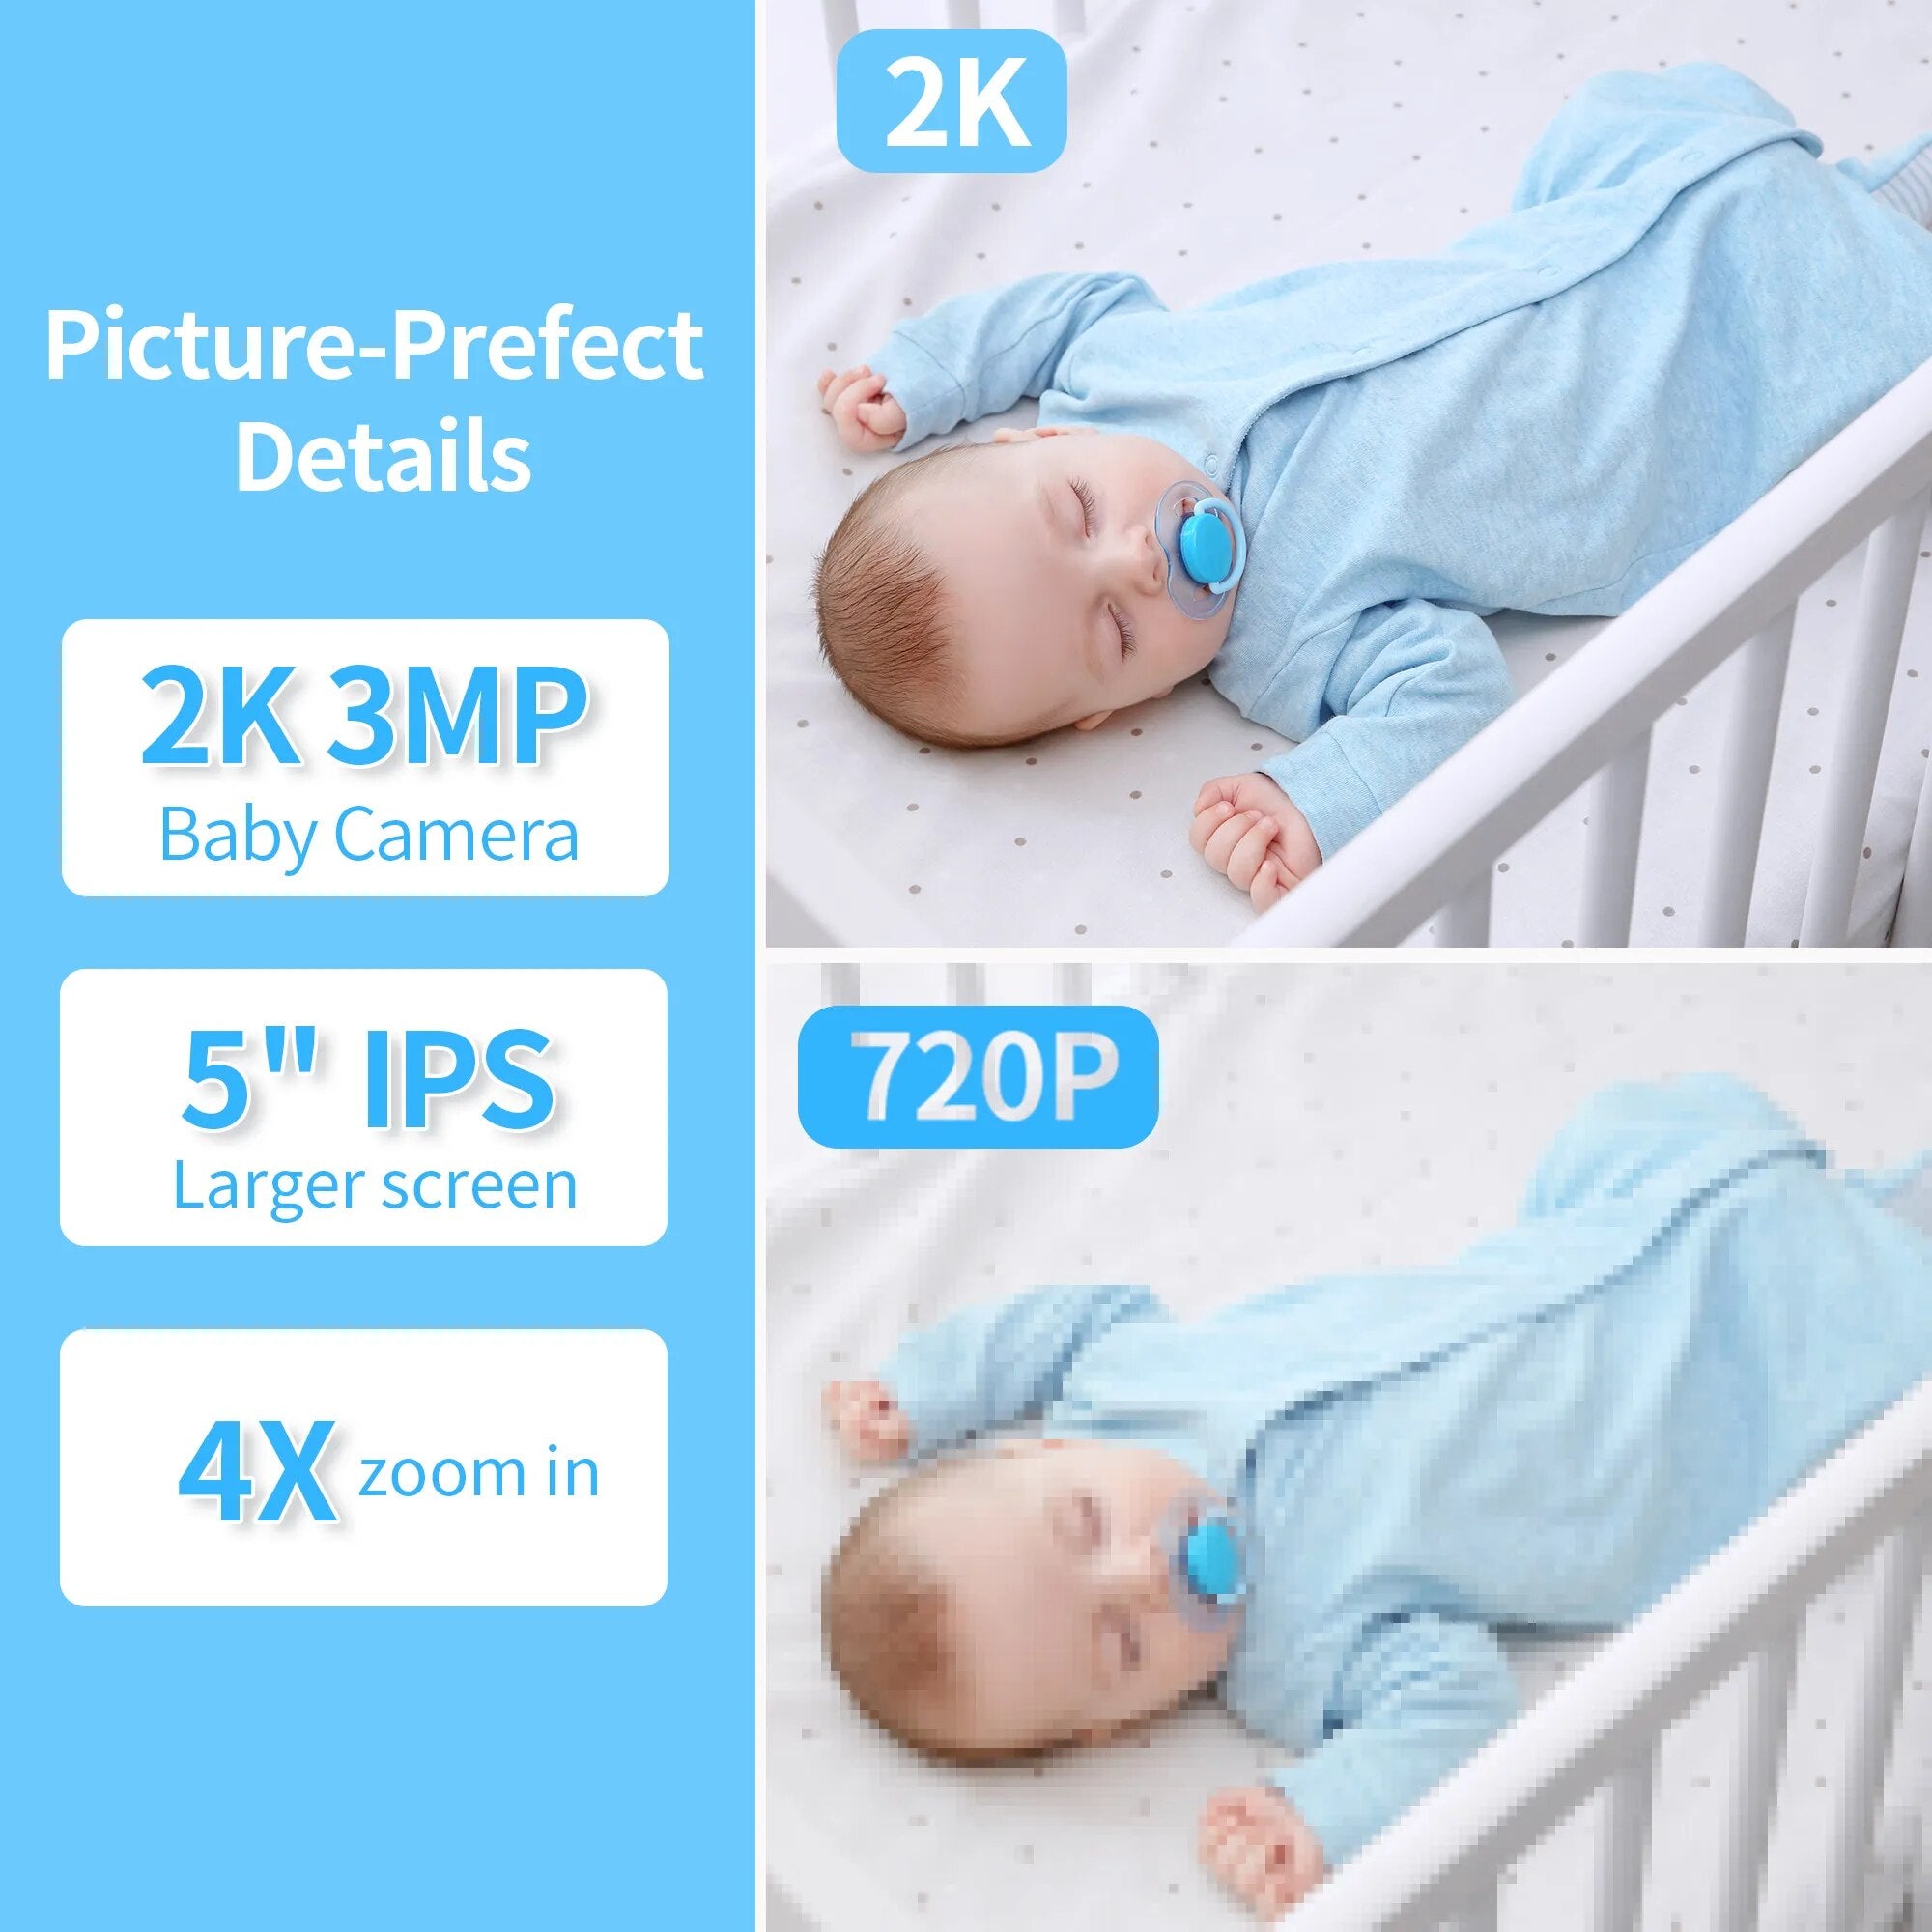 KAWA 2K Baby Monitor with Cameras Audio Video Nanny Wireless Camera with 4000mAh Battery 5 Inch Screen TF Card Night Vision 360°